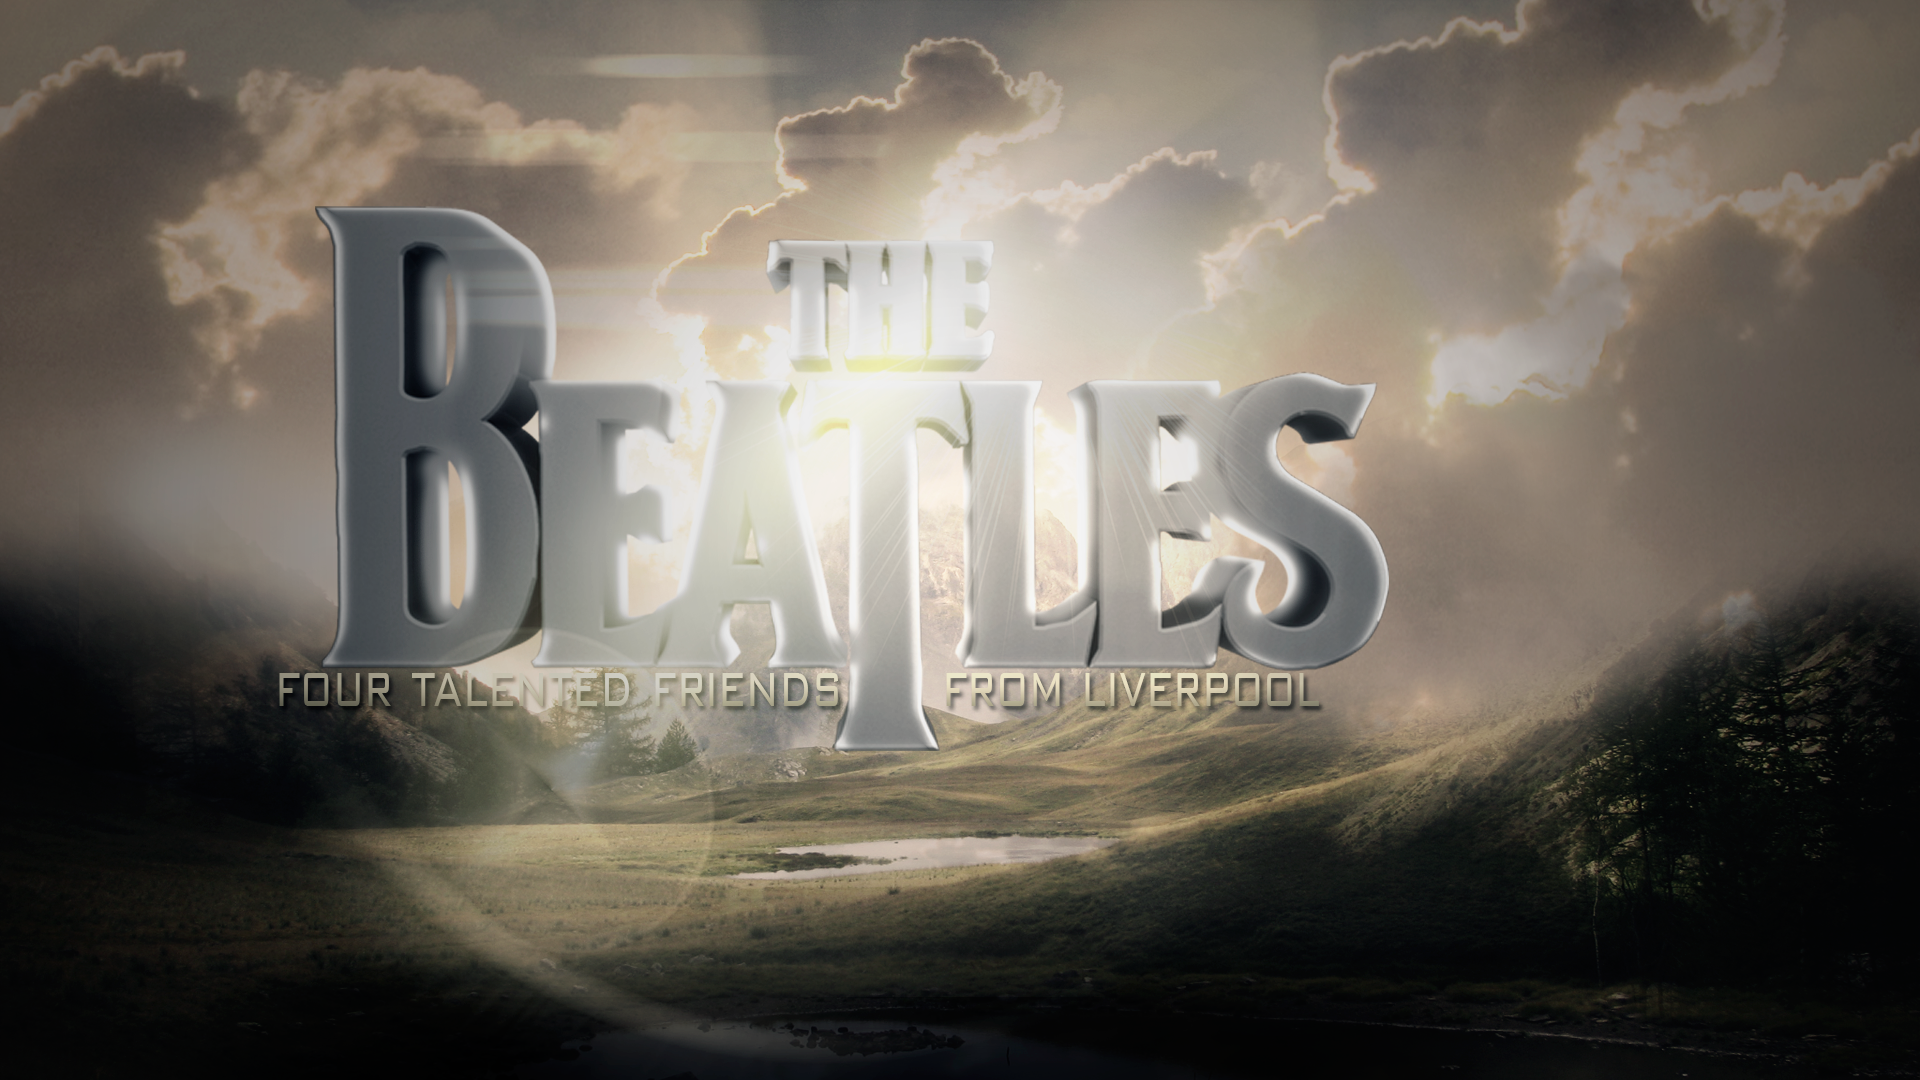 The Beatles Landscape Edited Digital Art Typography 1920x1080